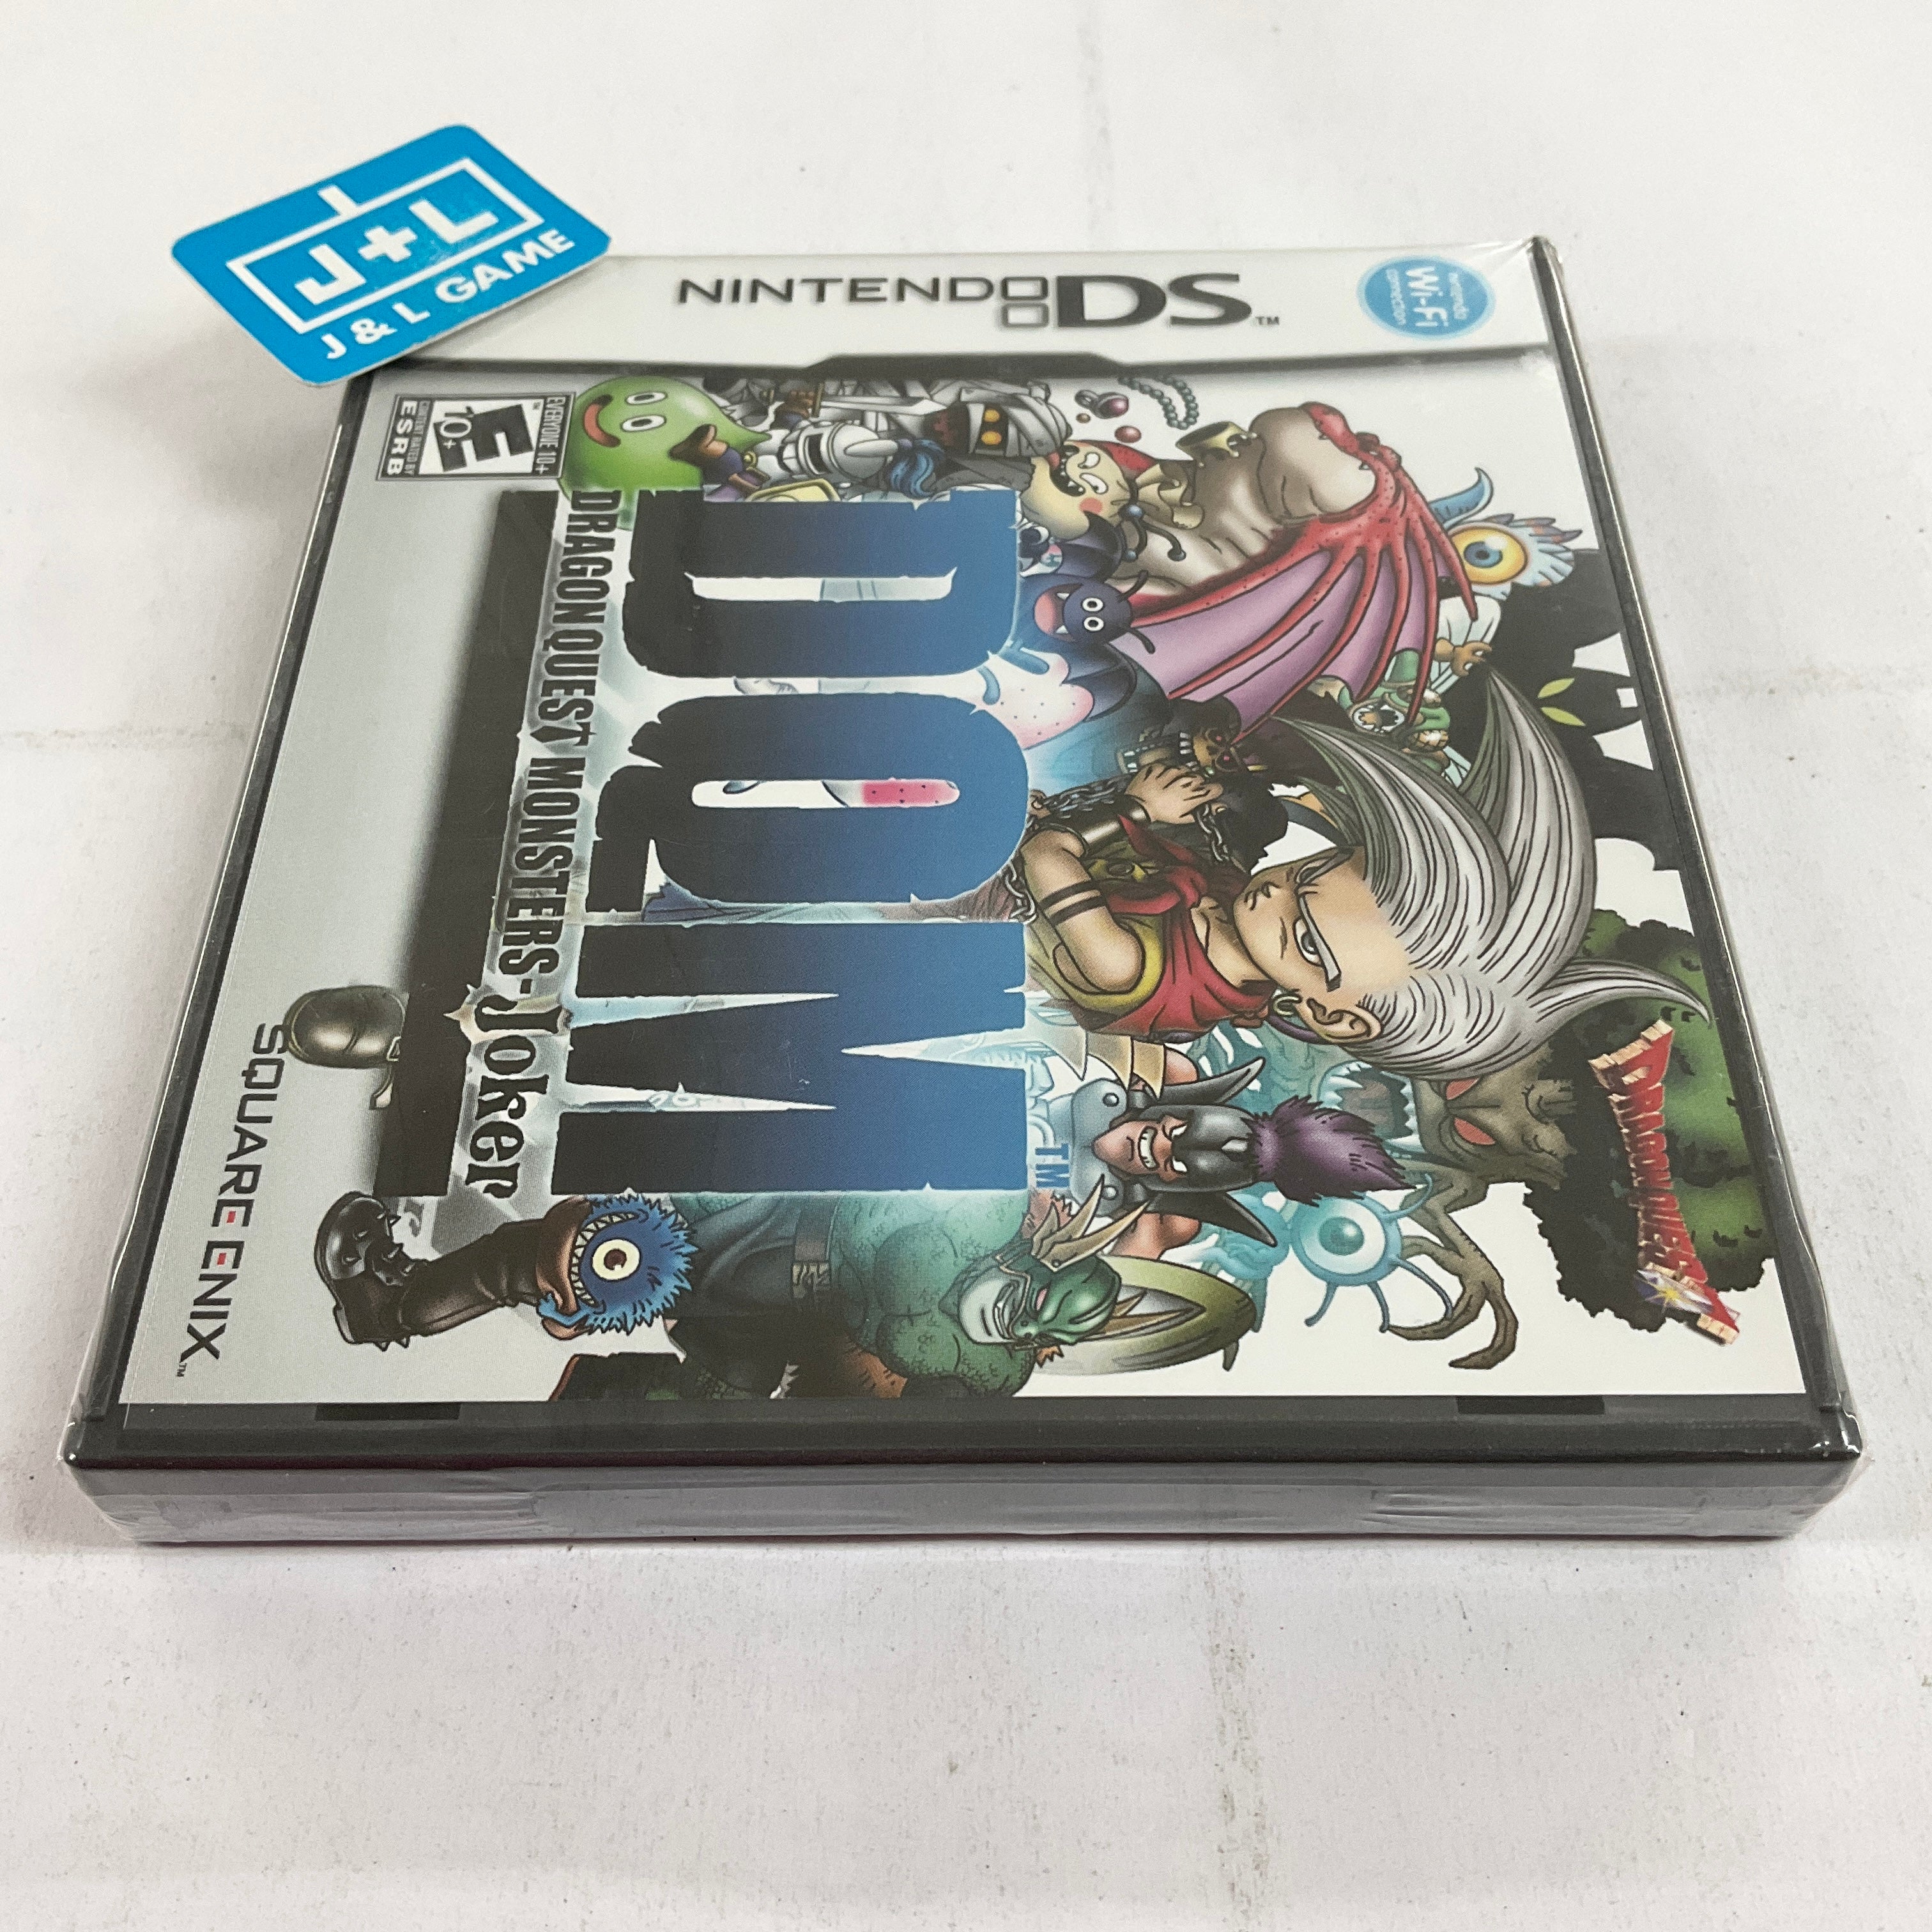 Dragon Quest Monsters: Joker - (NDS) Nintendo DS Video Games Square Enix   